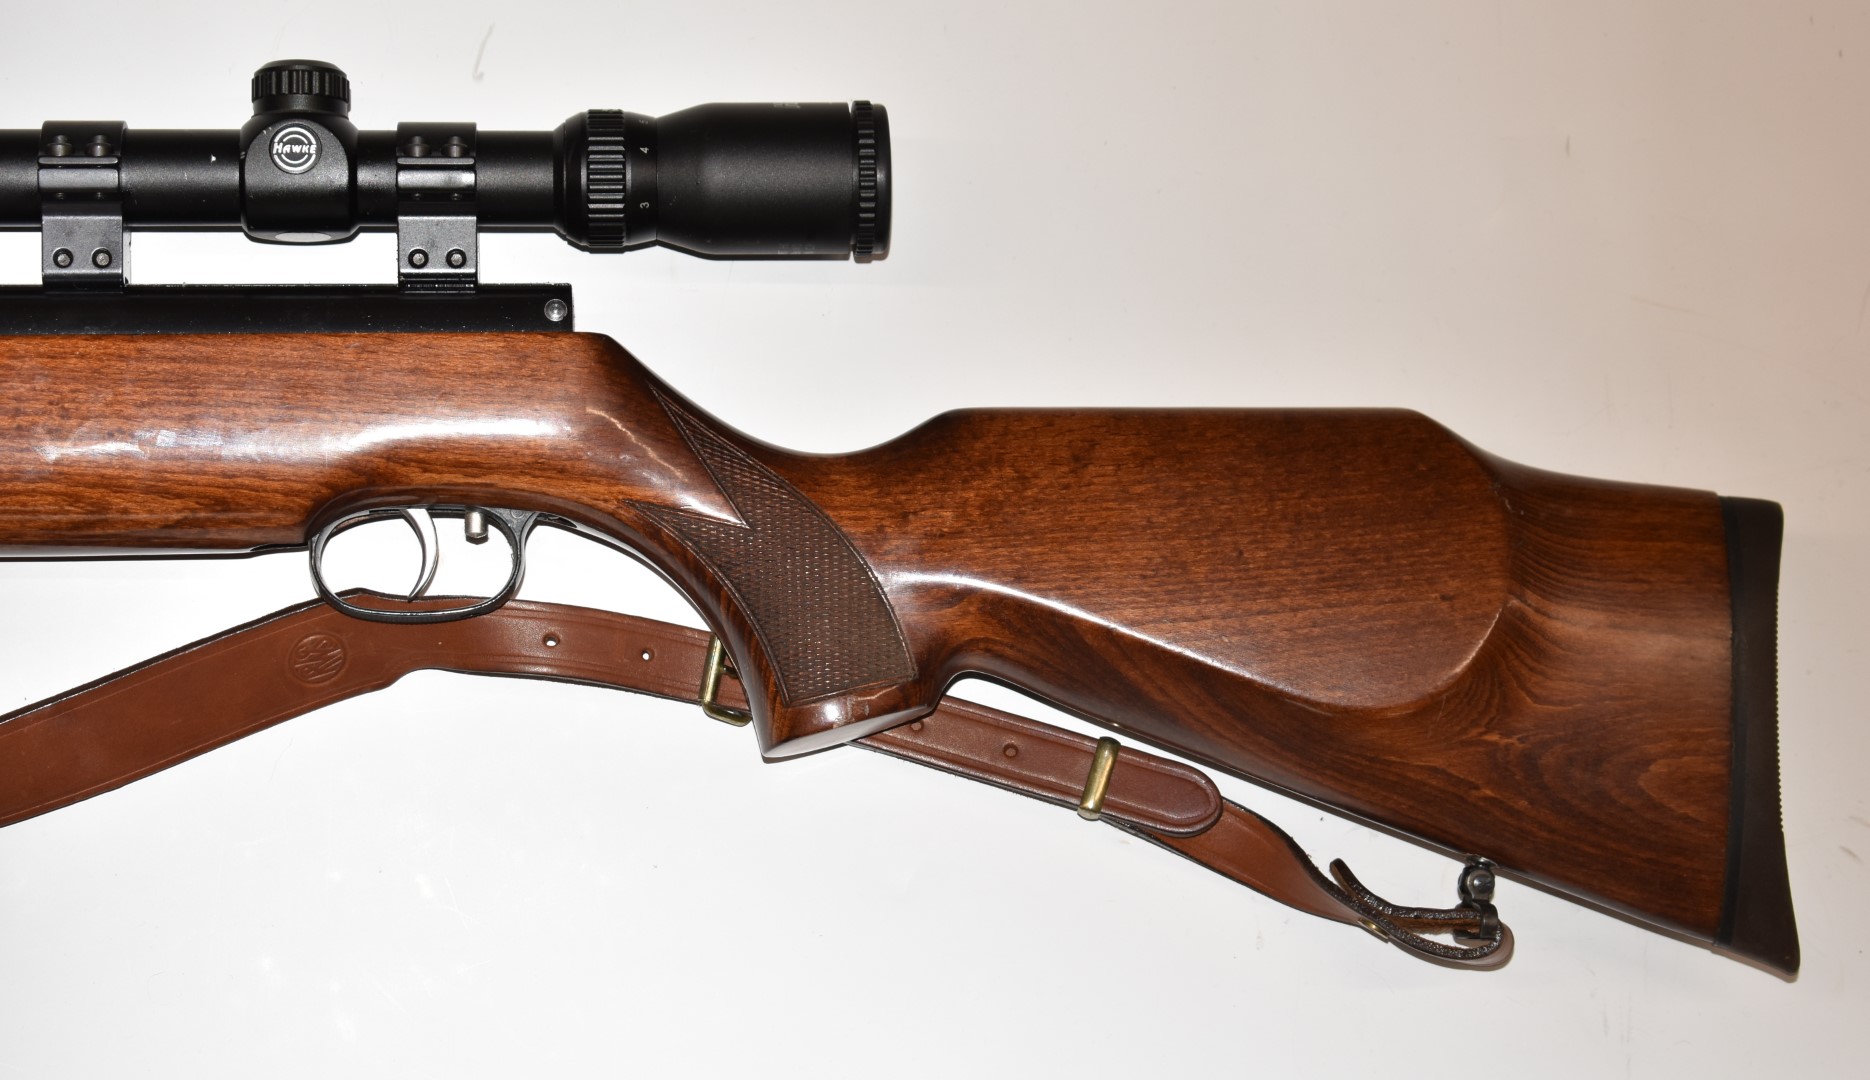 Weihrauch HW80K .22 air rifle with chequered semi-pistol grip, raised cheek piece, adjustable - Image 7 of 11